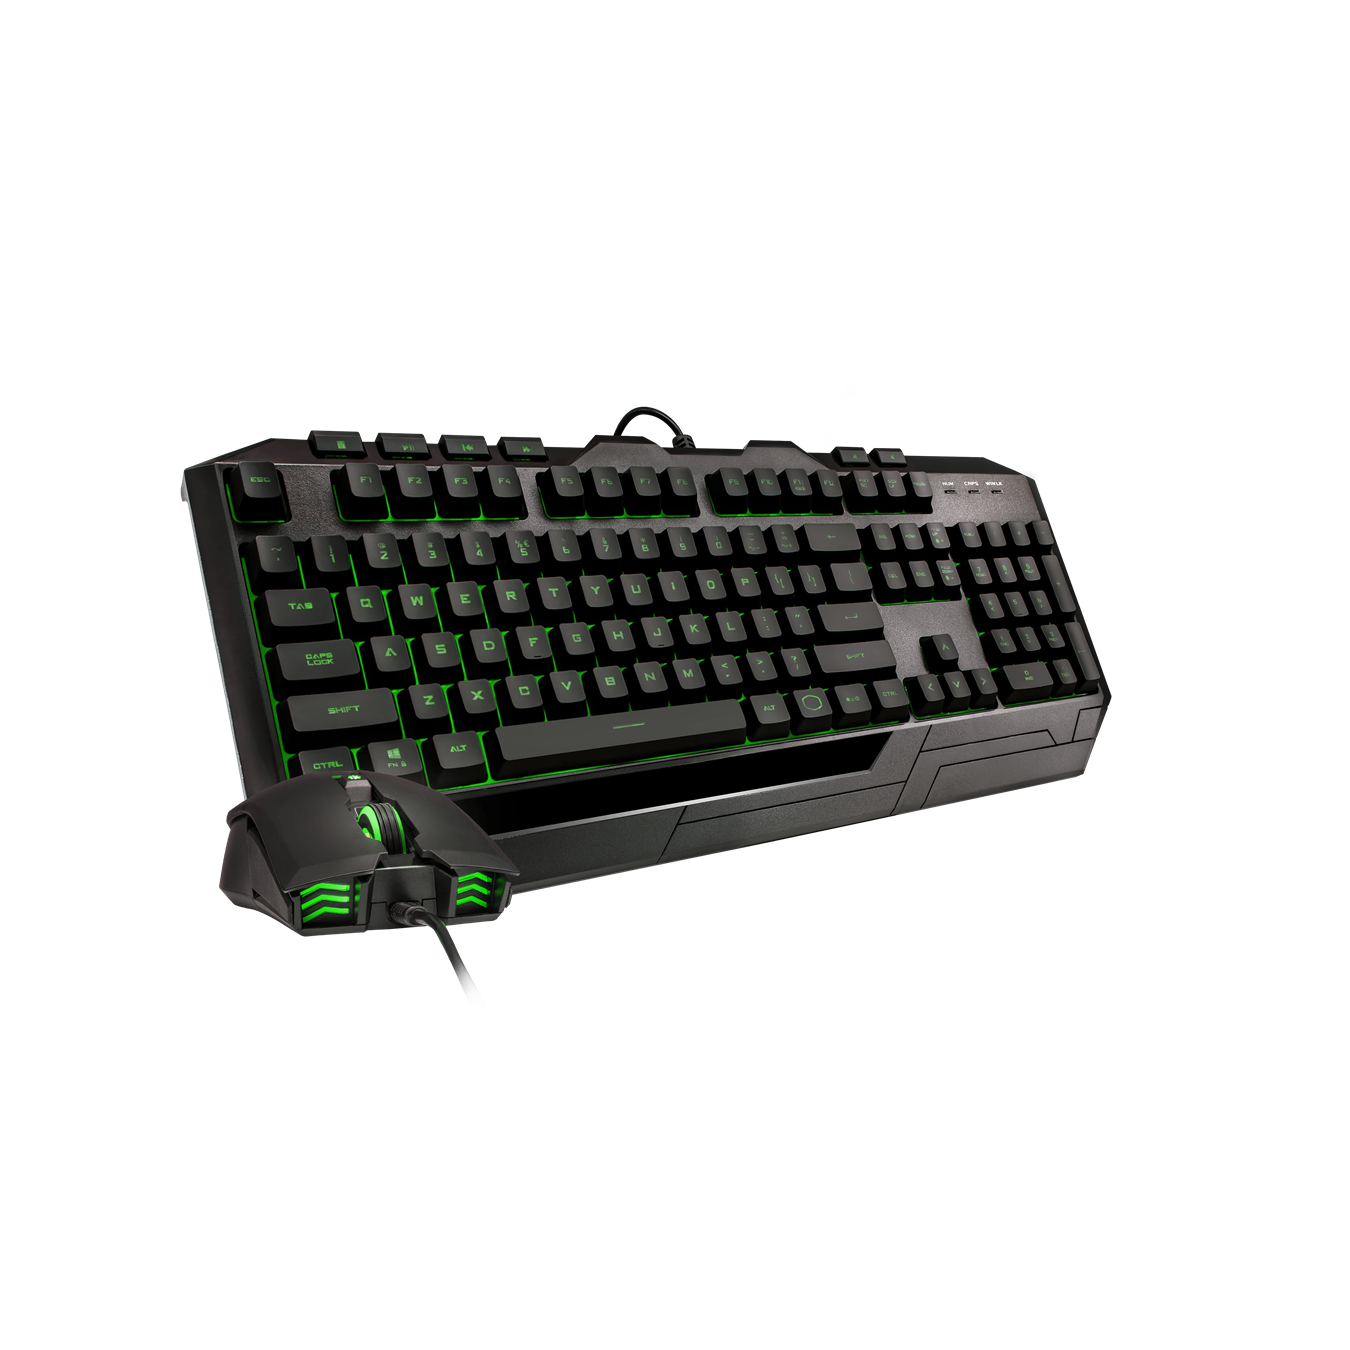 Devastator 3 Plus - keyboard with green backlight